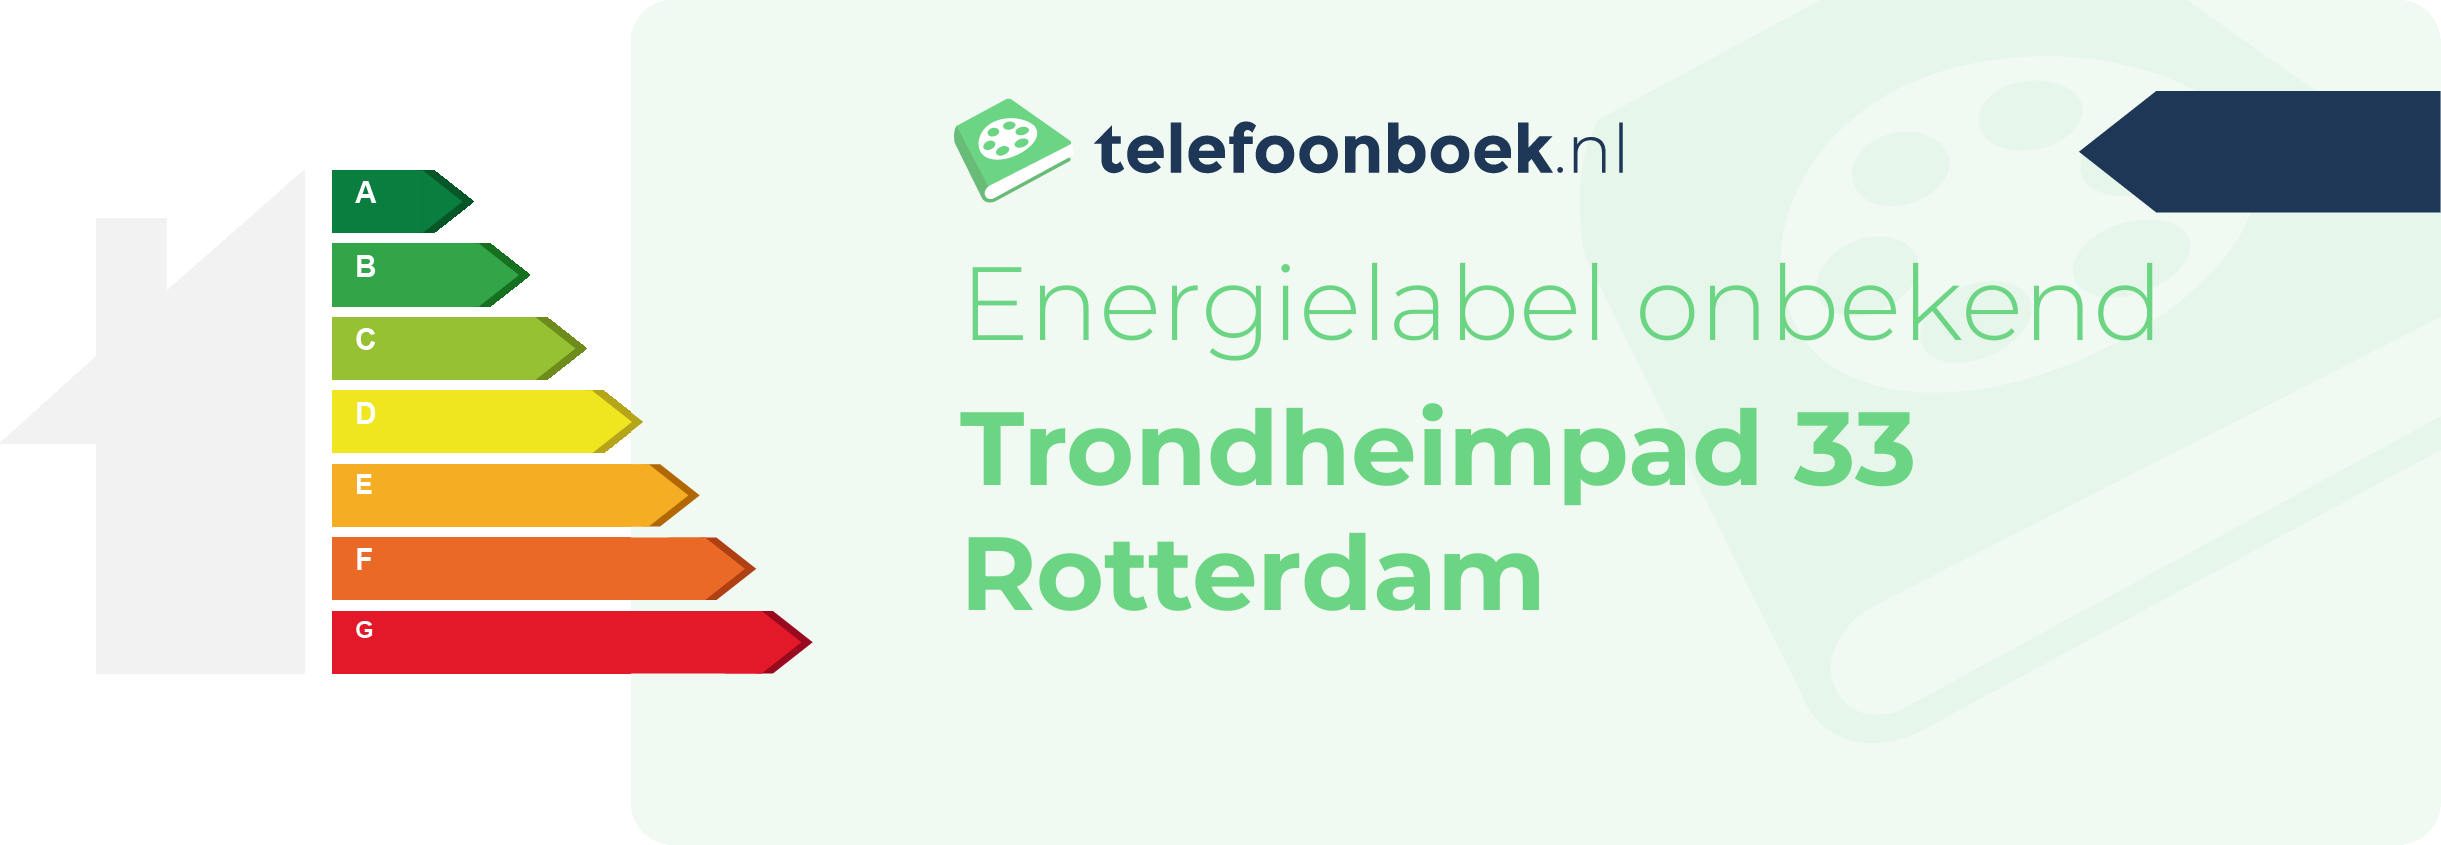 Energielabel Trondheimpad 33 Rotterdam